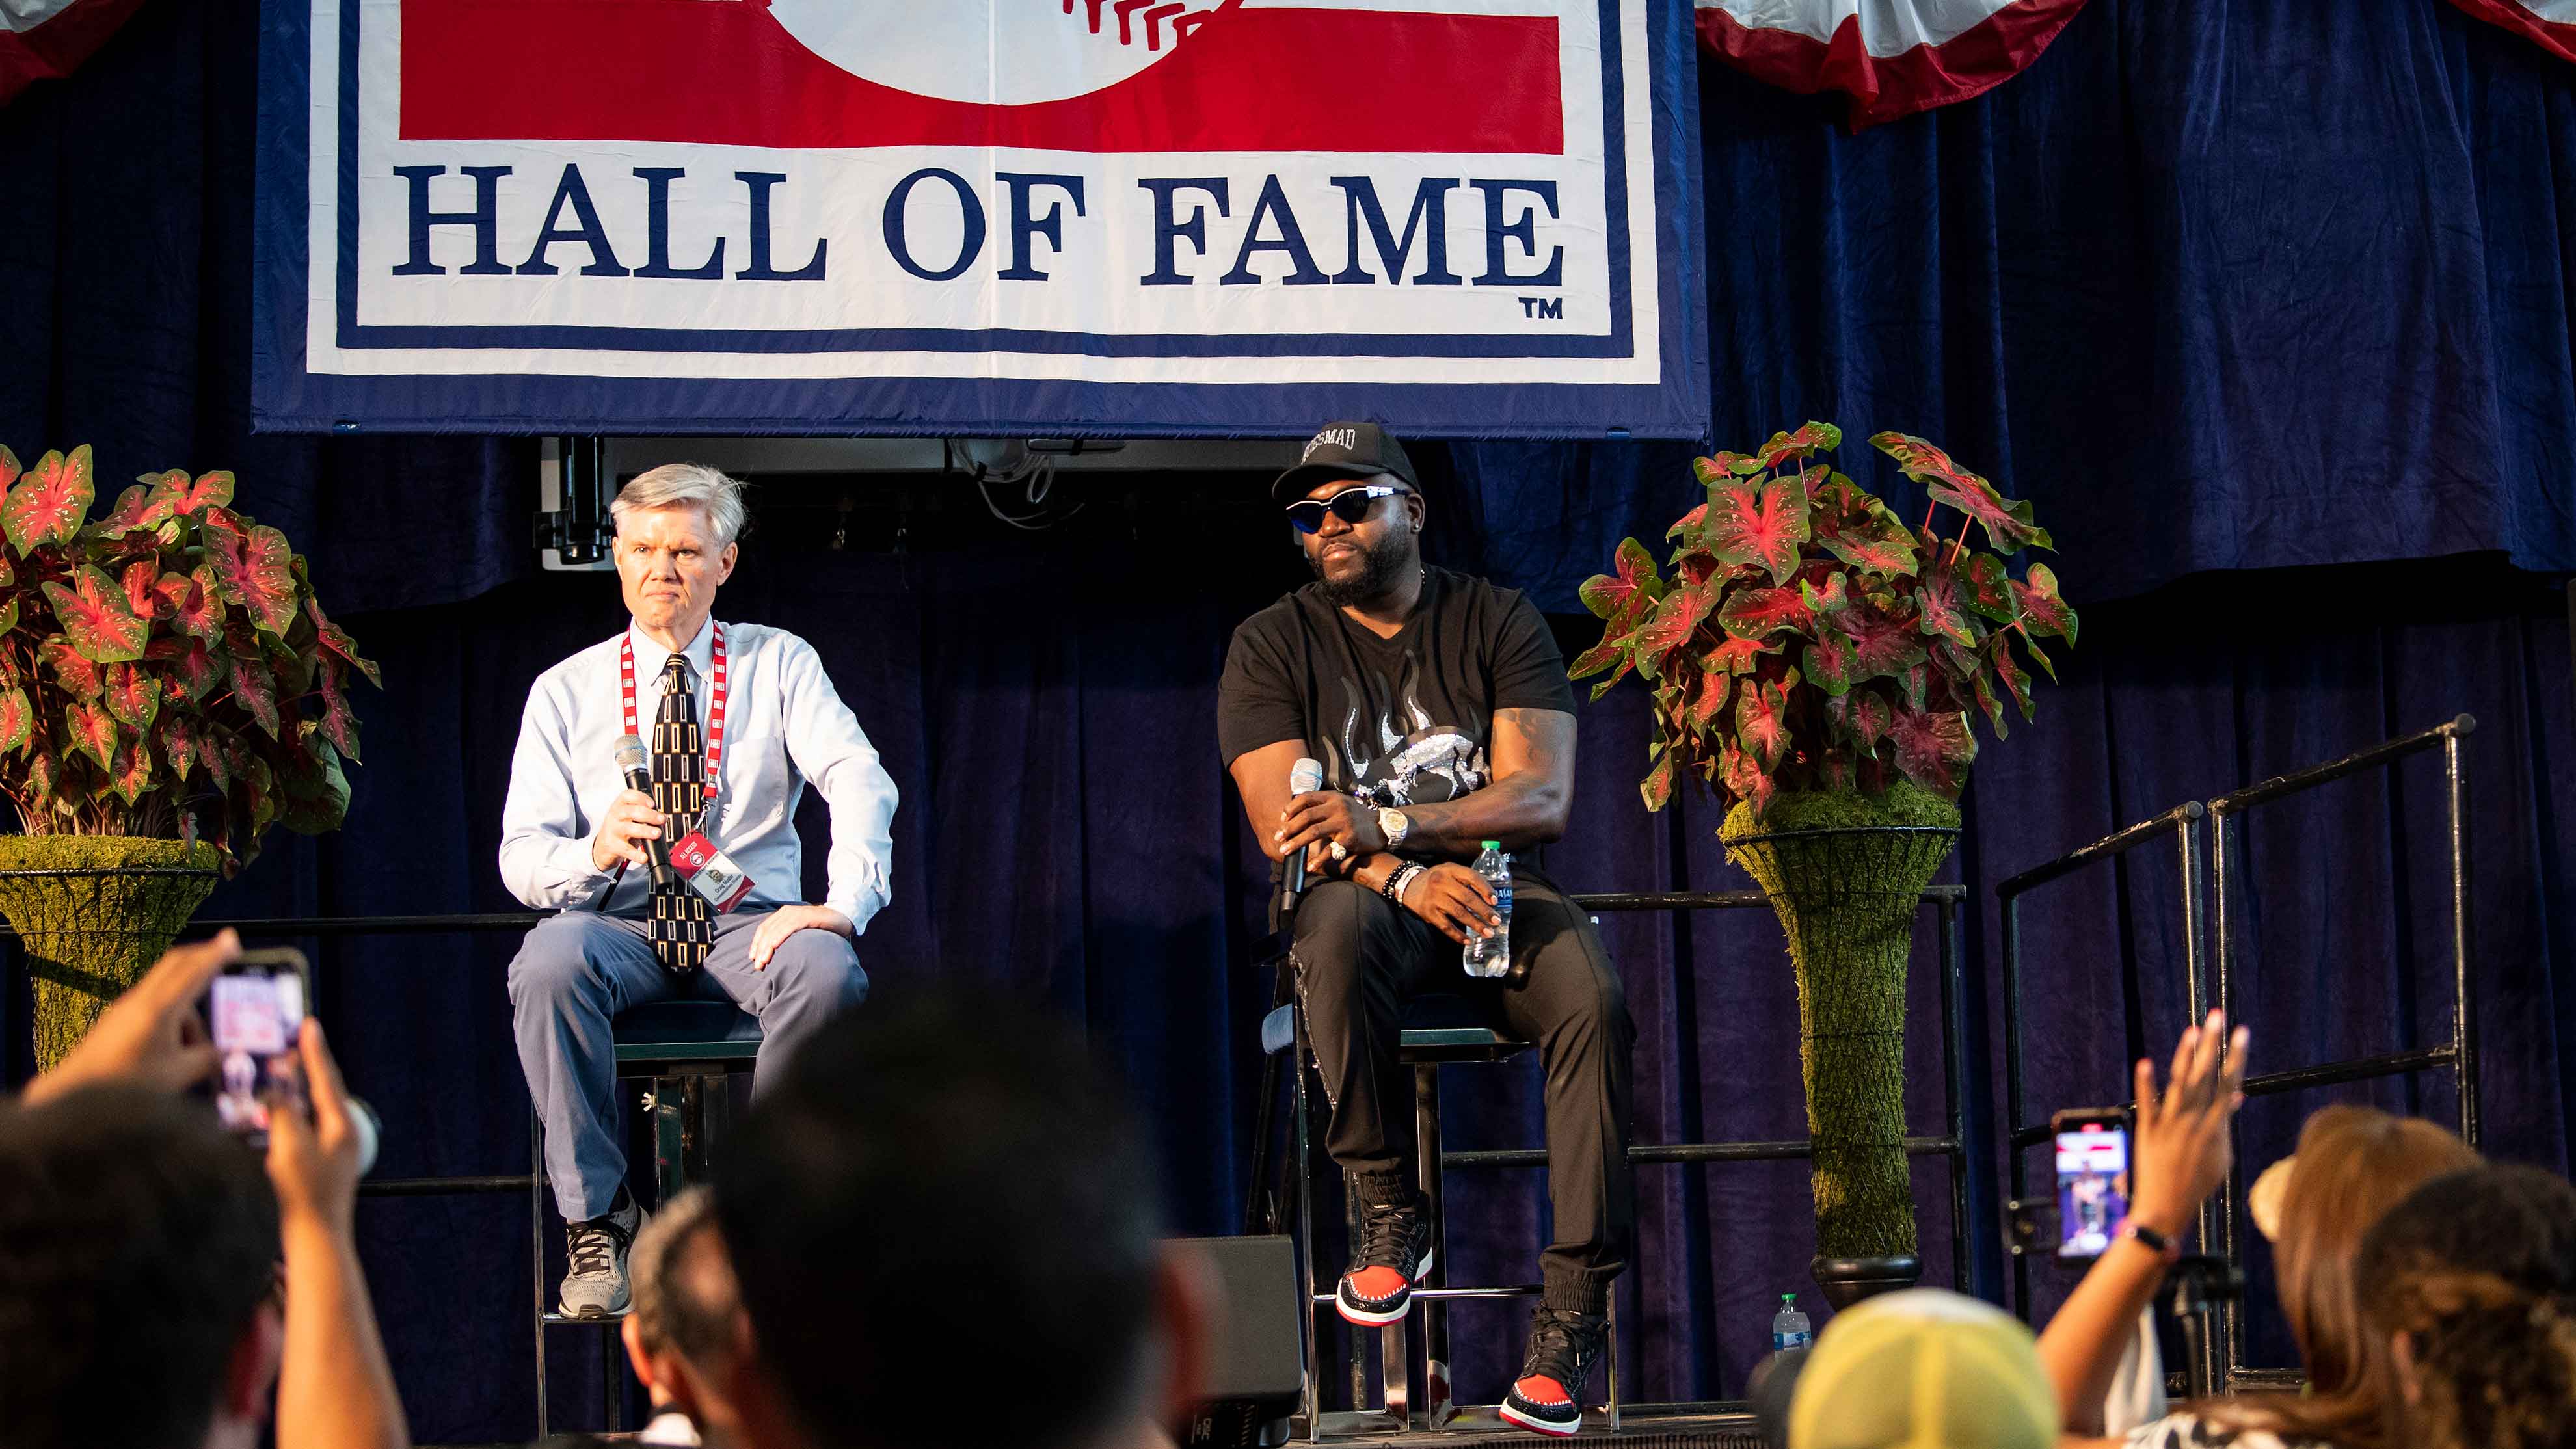 Baseball Hall of Fame ceremony: Live stream, start time, TV channel